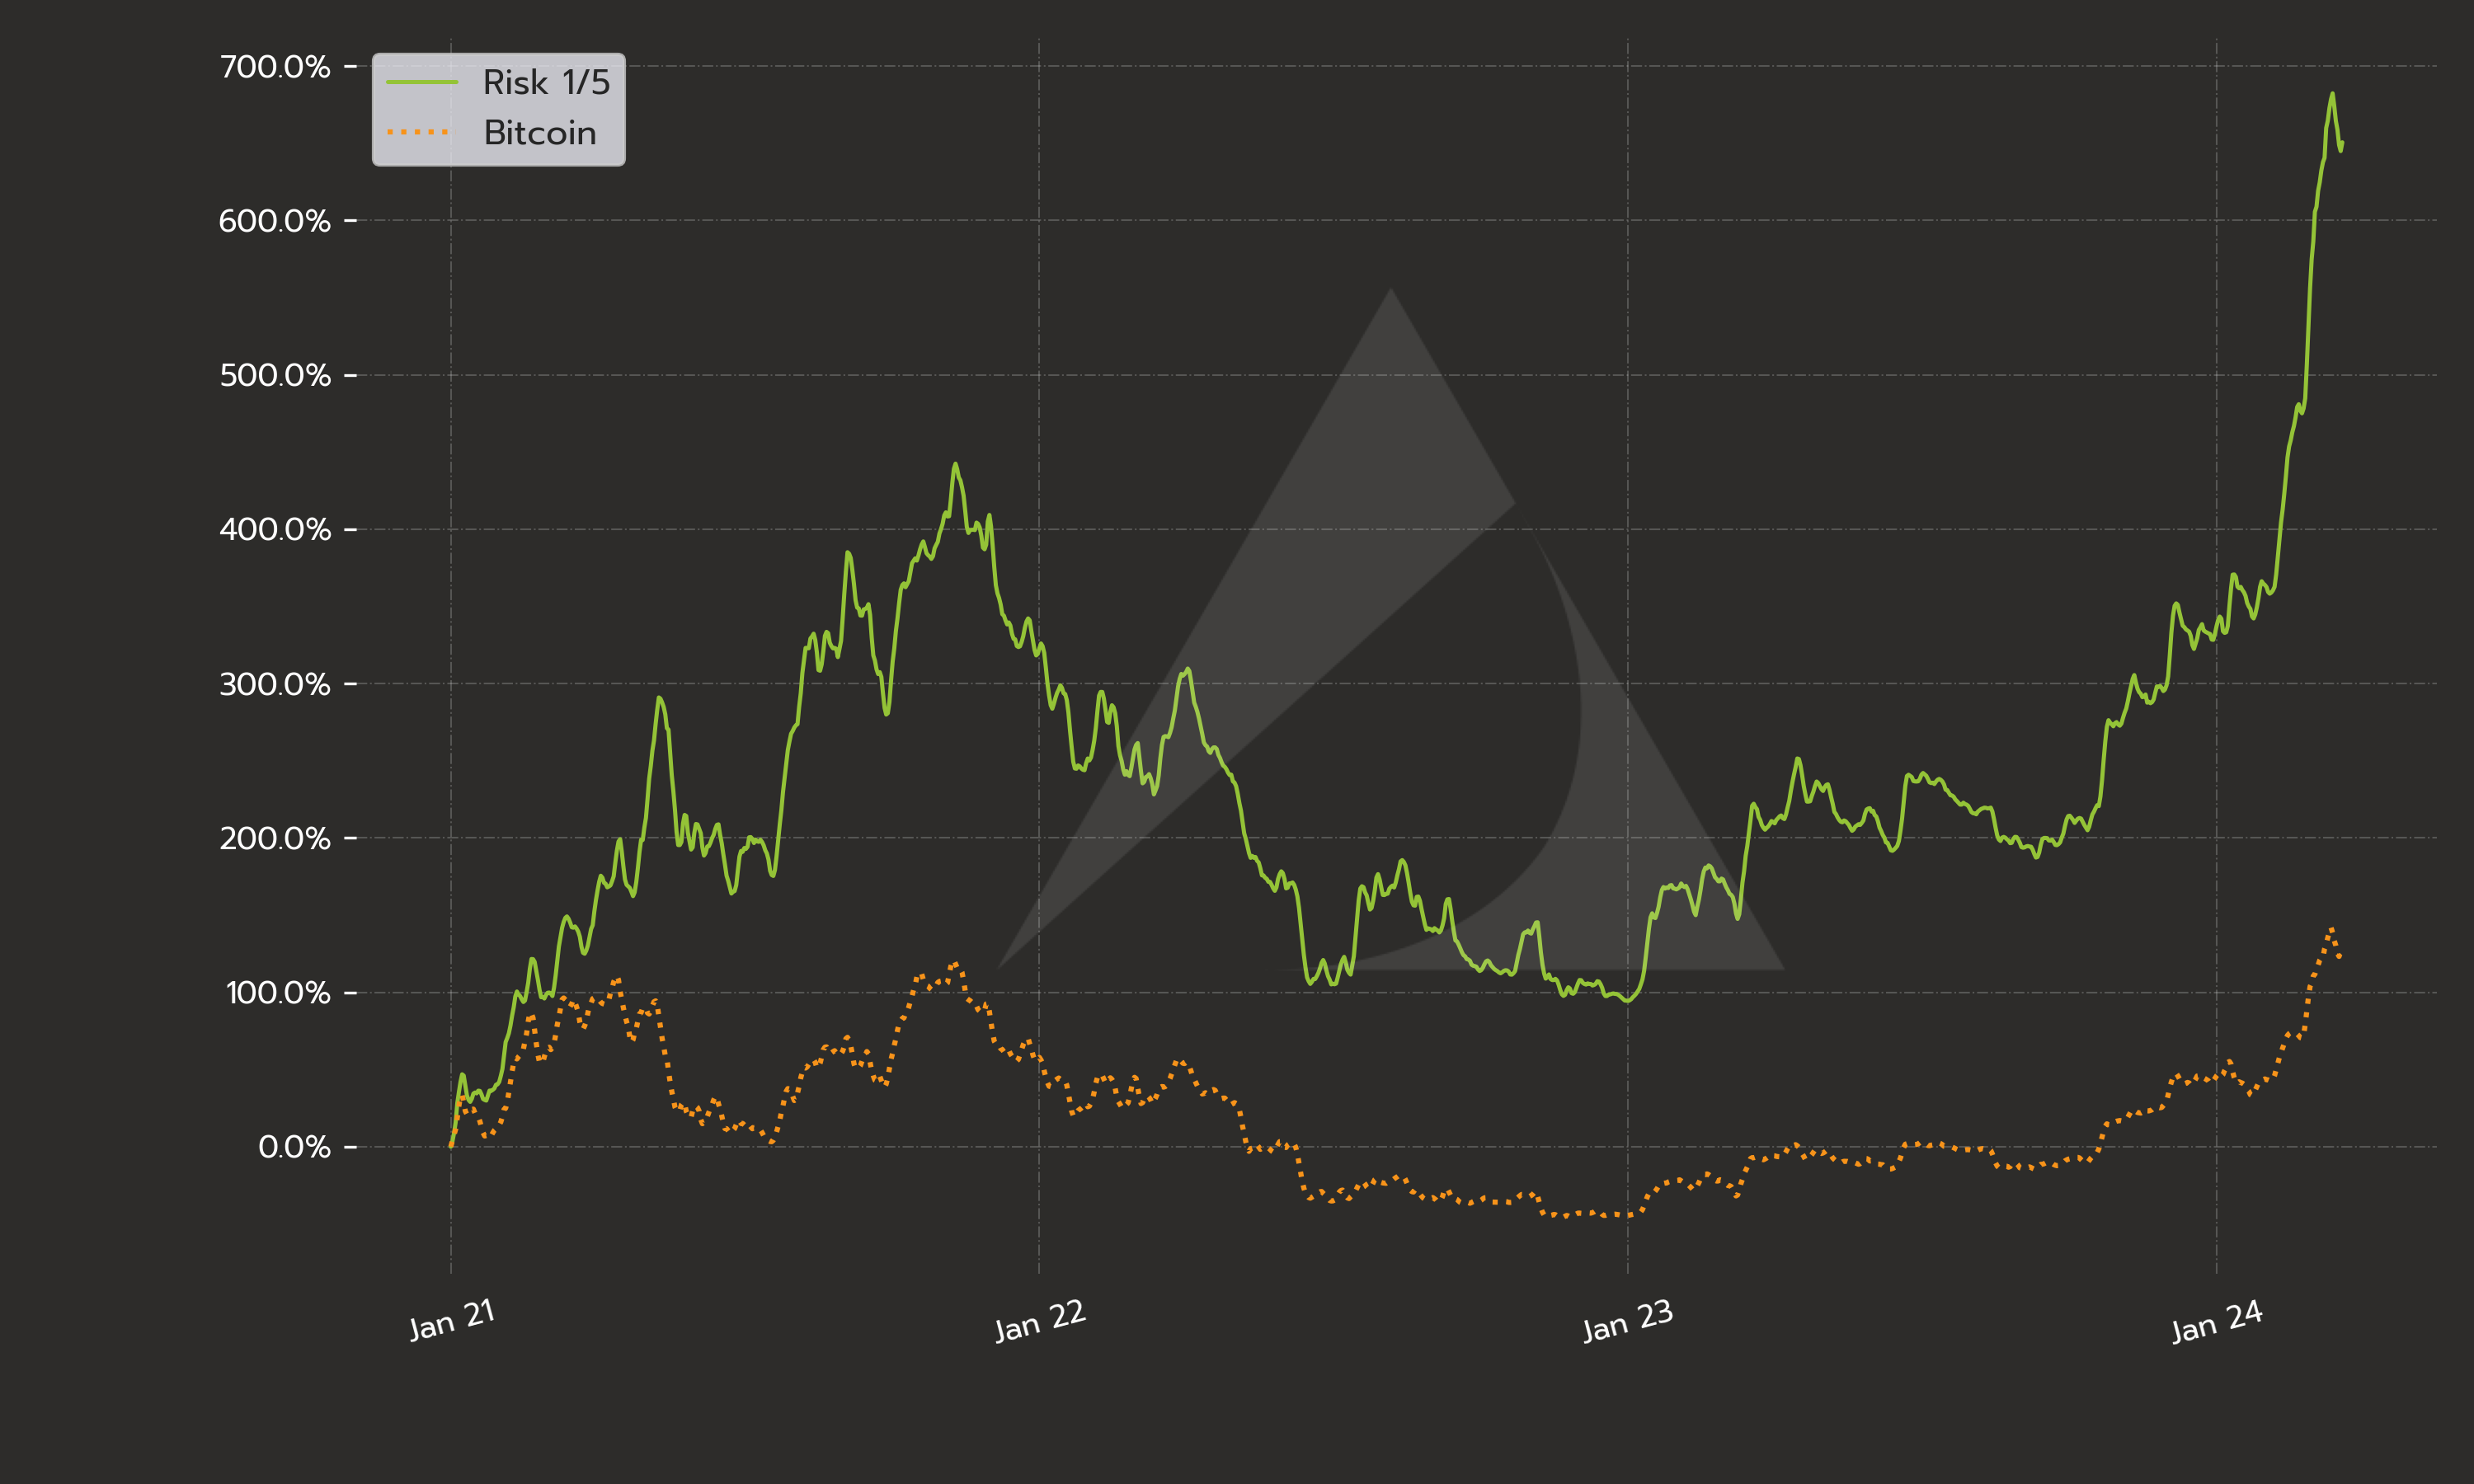 2021-2024 Risk 1/5 performance vs Bitcoin